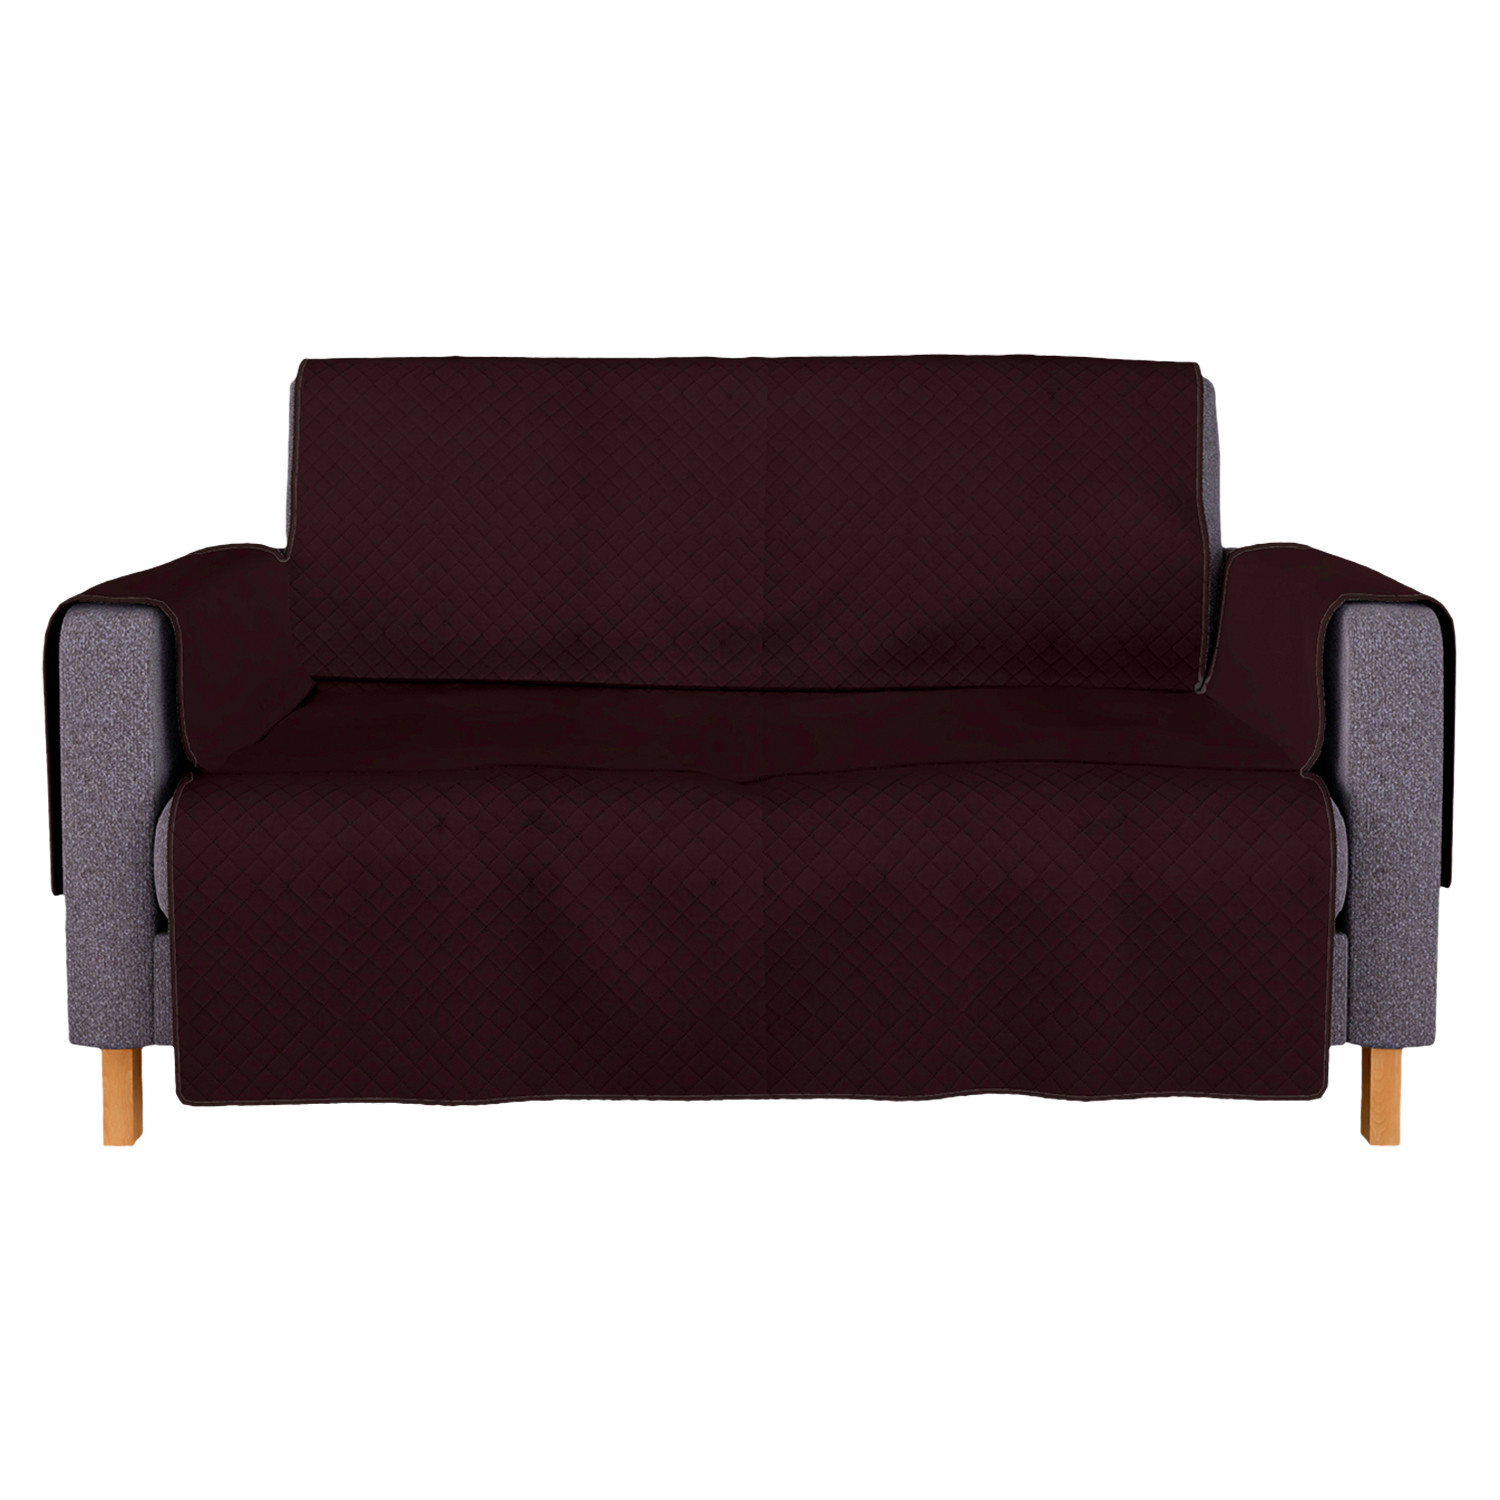 Kuber Industries Sofa Cover | Velvet Sofa Cover | 2-Seater Sofa Cover for Home Décor | 450 GSM Sofa Cover Set for Living Room | Sofa Slipcover | Couch Cover | Brown